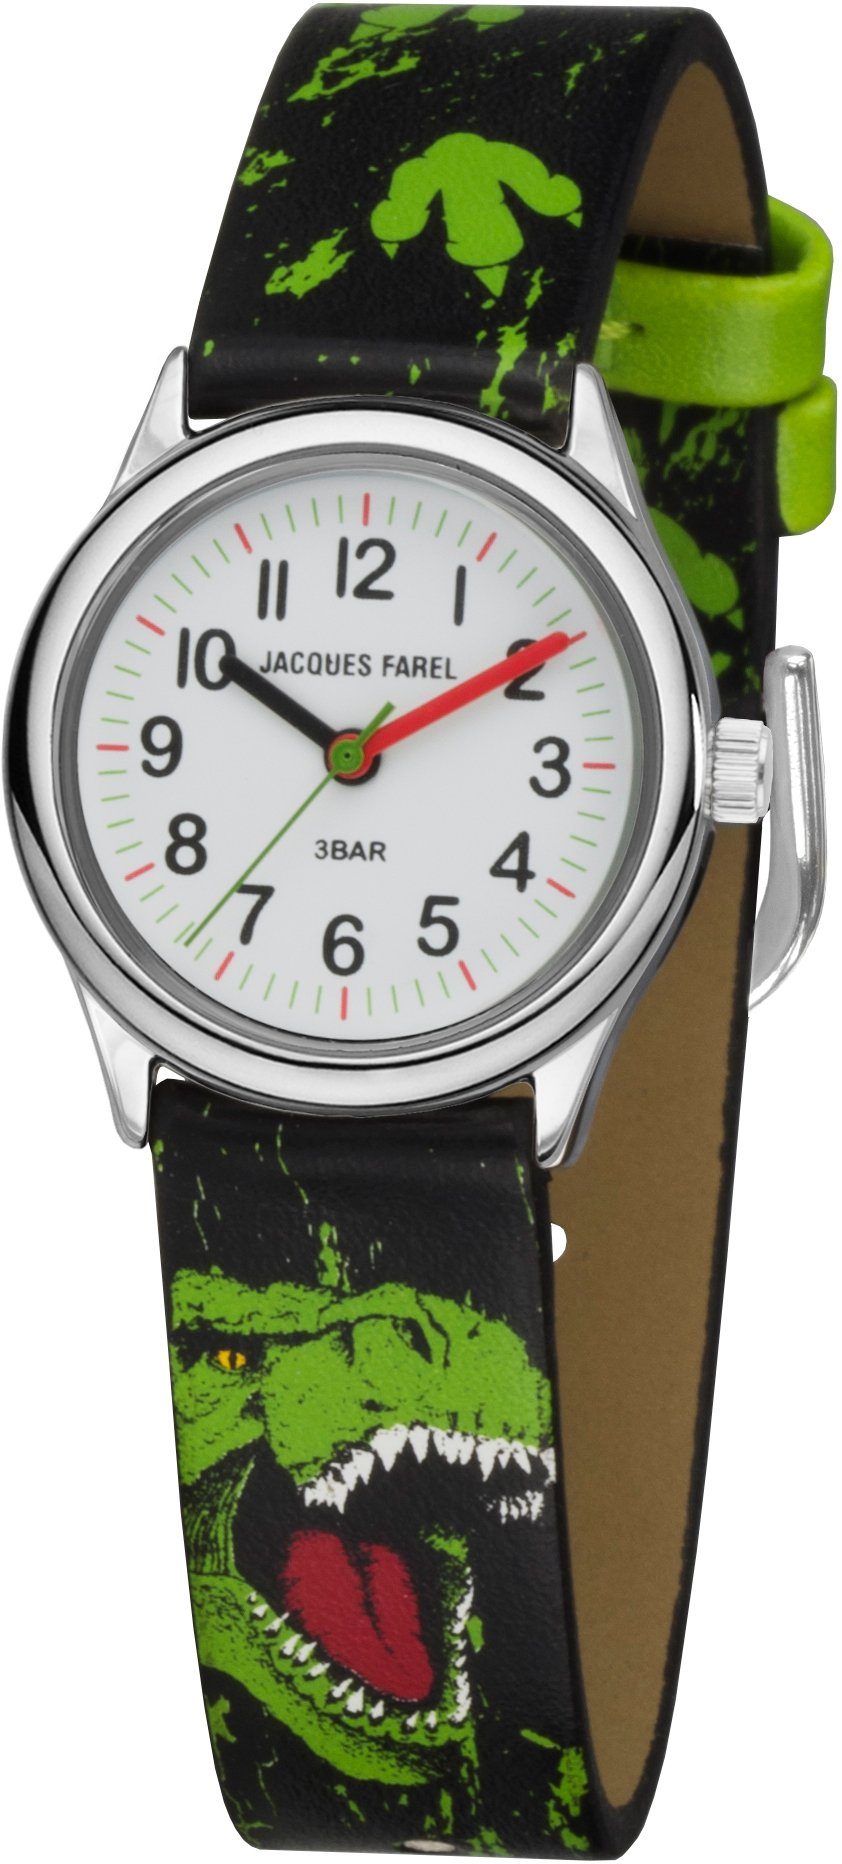 Jacques Farel Quarzuhr HCC 921, ideal auch als Geschenk, Metallgehäuse IPS,  silberfarben beschichtet